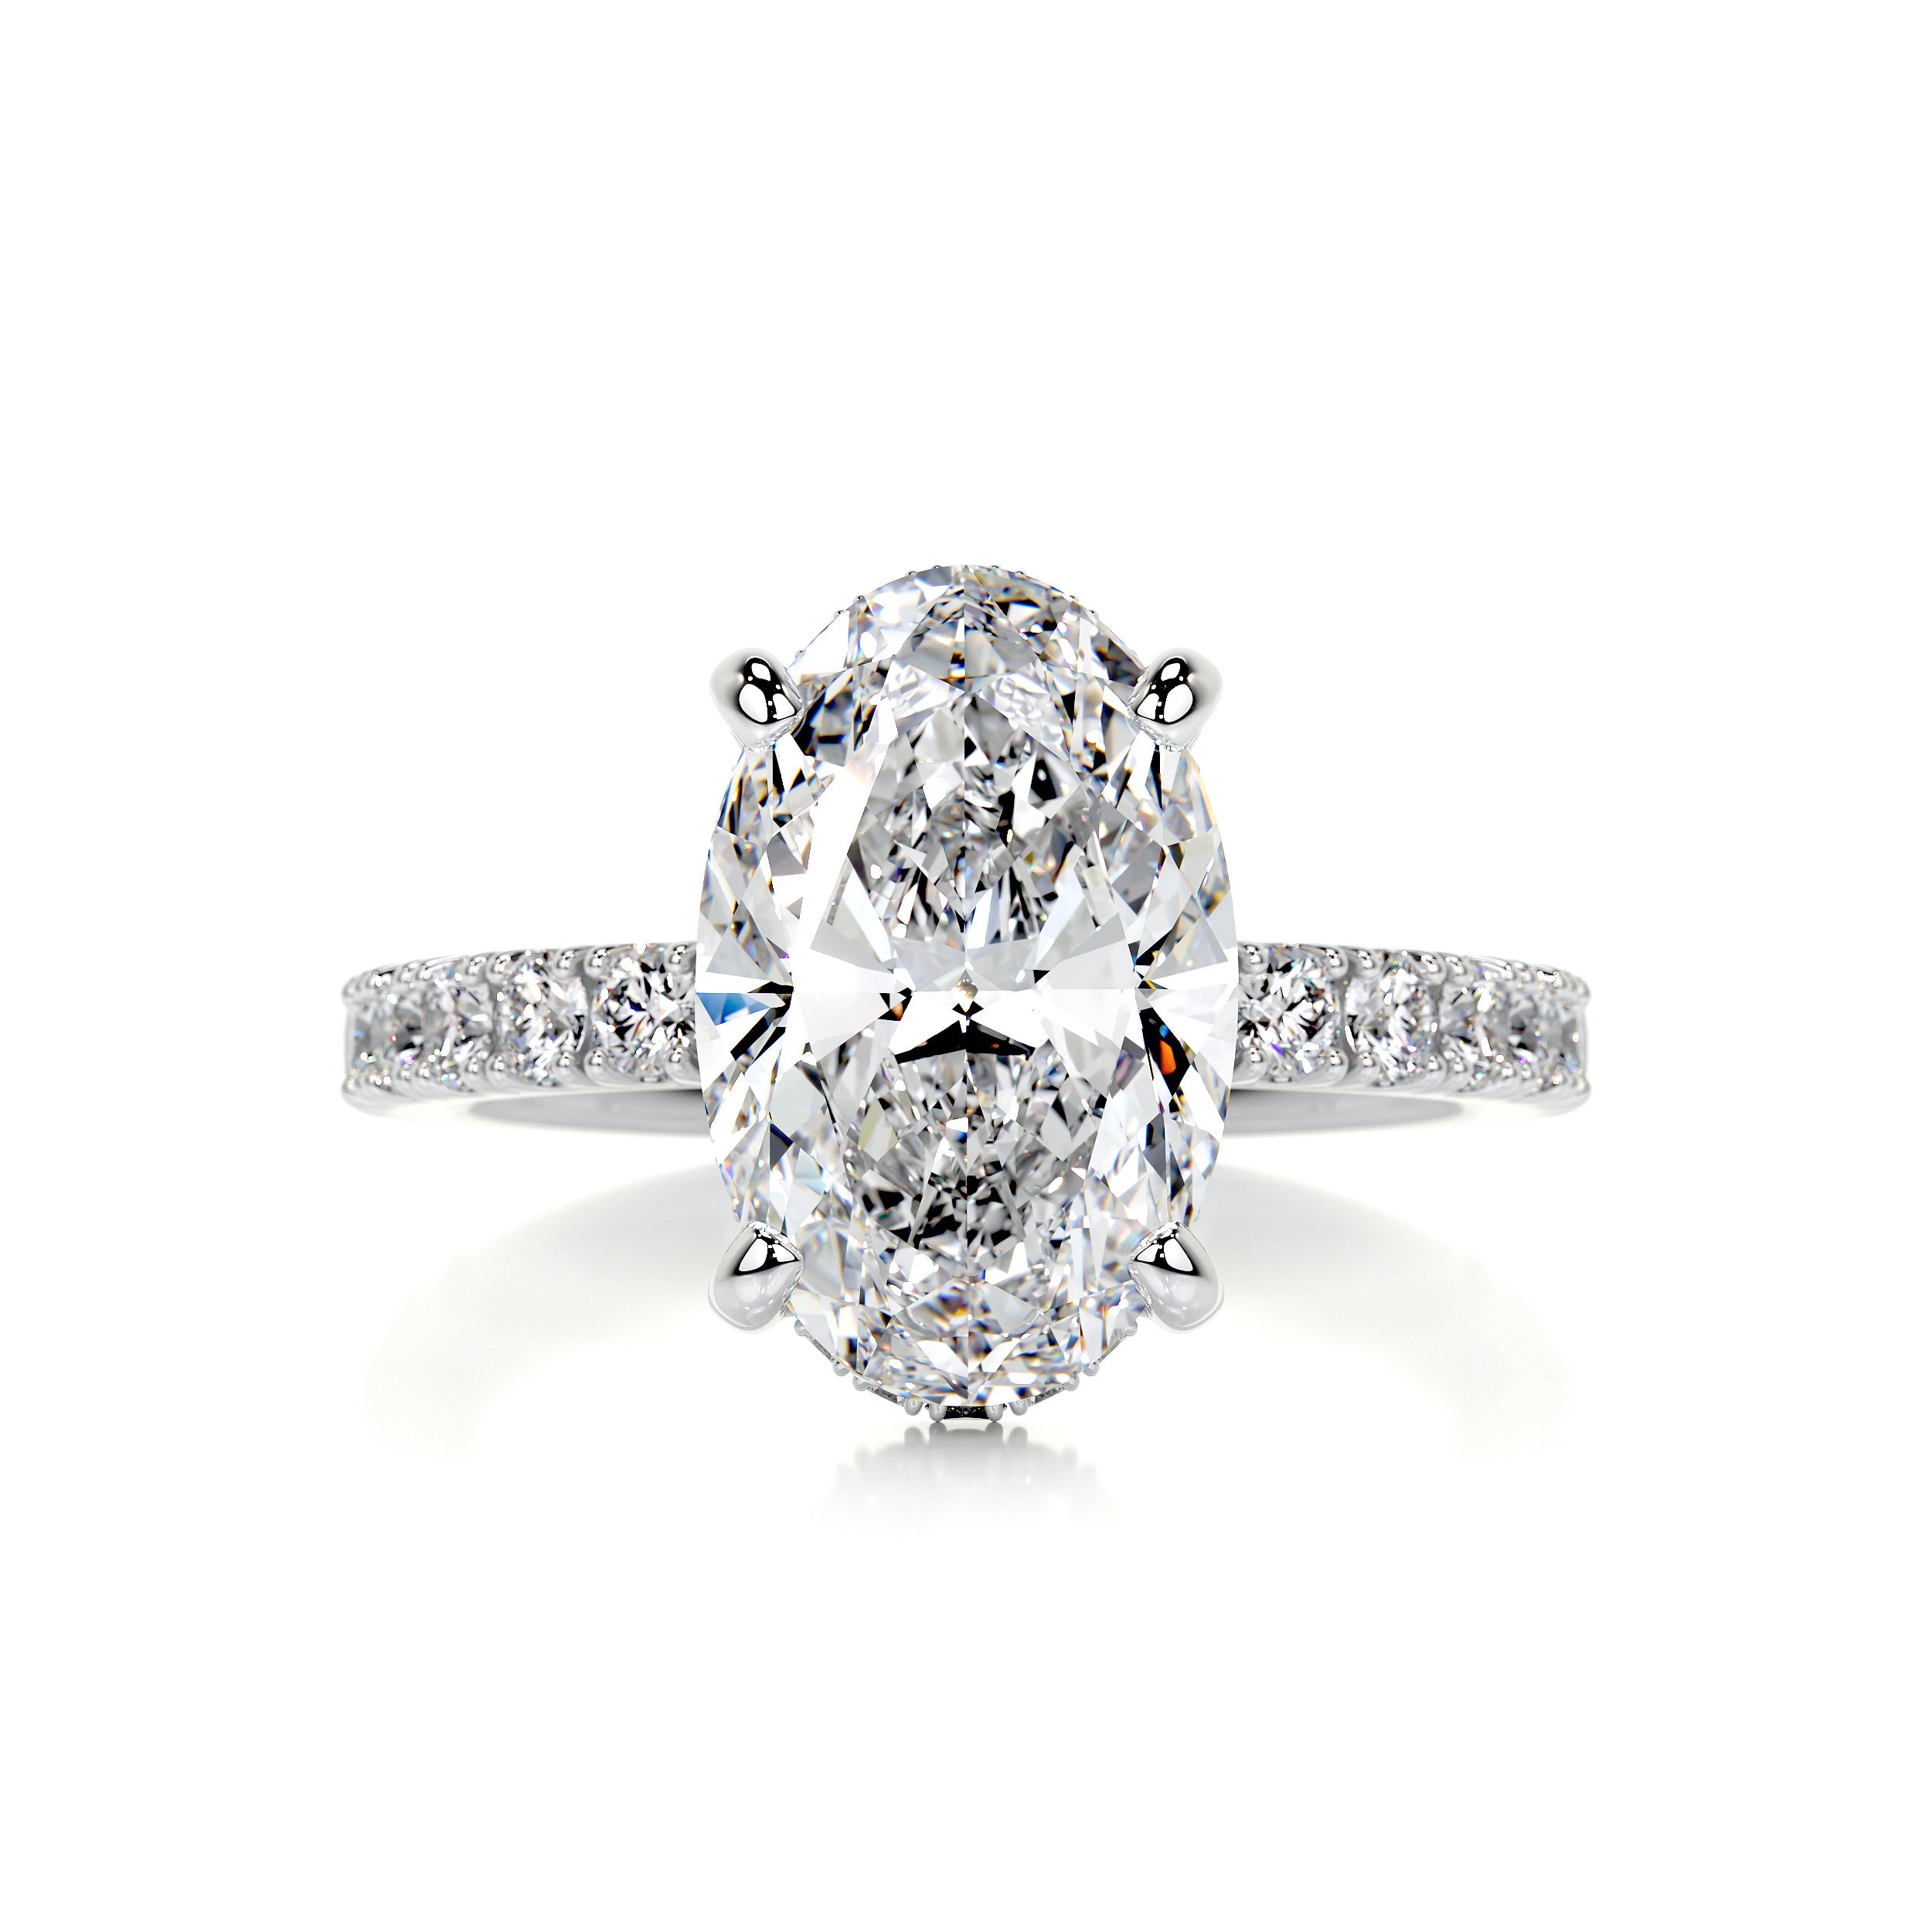 Lucy Diamond Engagement Ring   (3.5 Carat) -Platinum